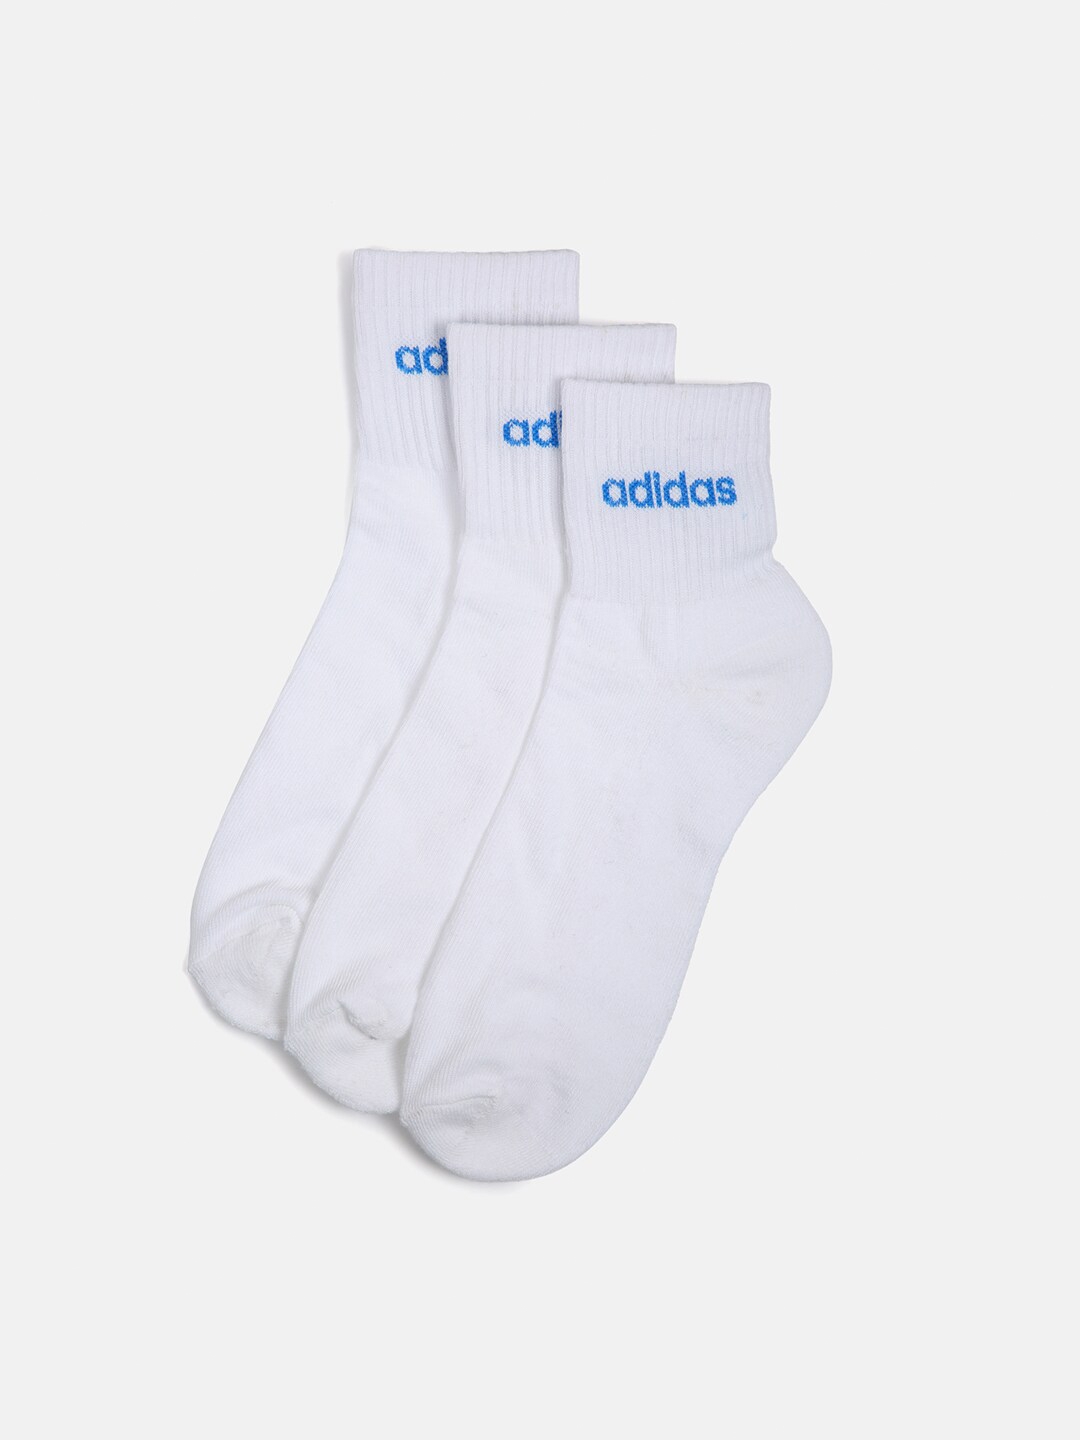 ADIDAS Men Pack Of 3 Assorted Ankle Length Socks